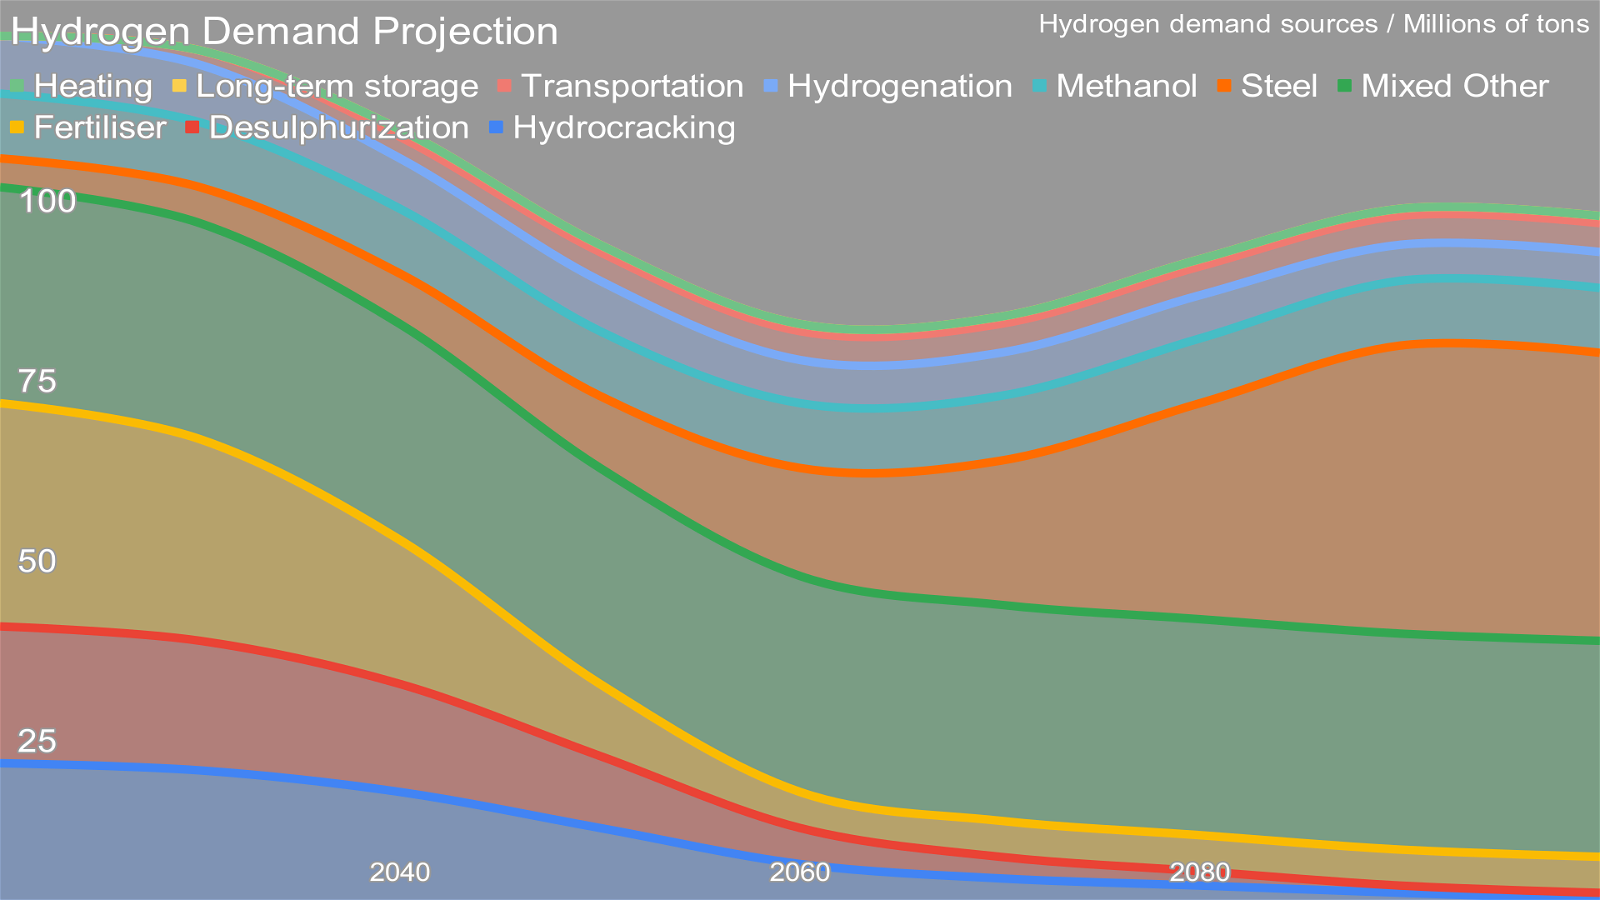 Figure 1: Hydrogen demand by demand area through 2100 projection by author (https://illuminem.com/energyvoices/418d4ca0-e051-413e-93b1-58fca3aa4109)